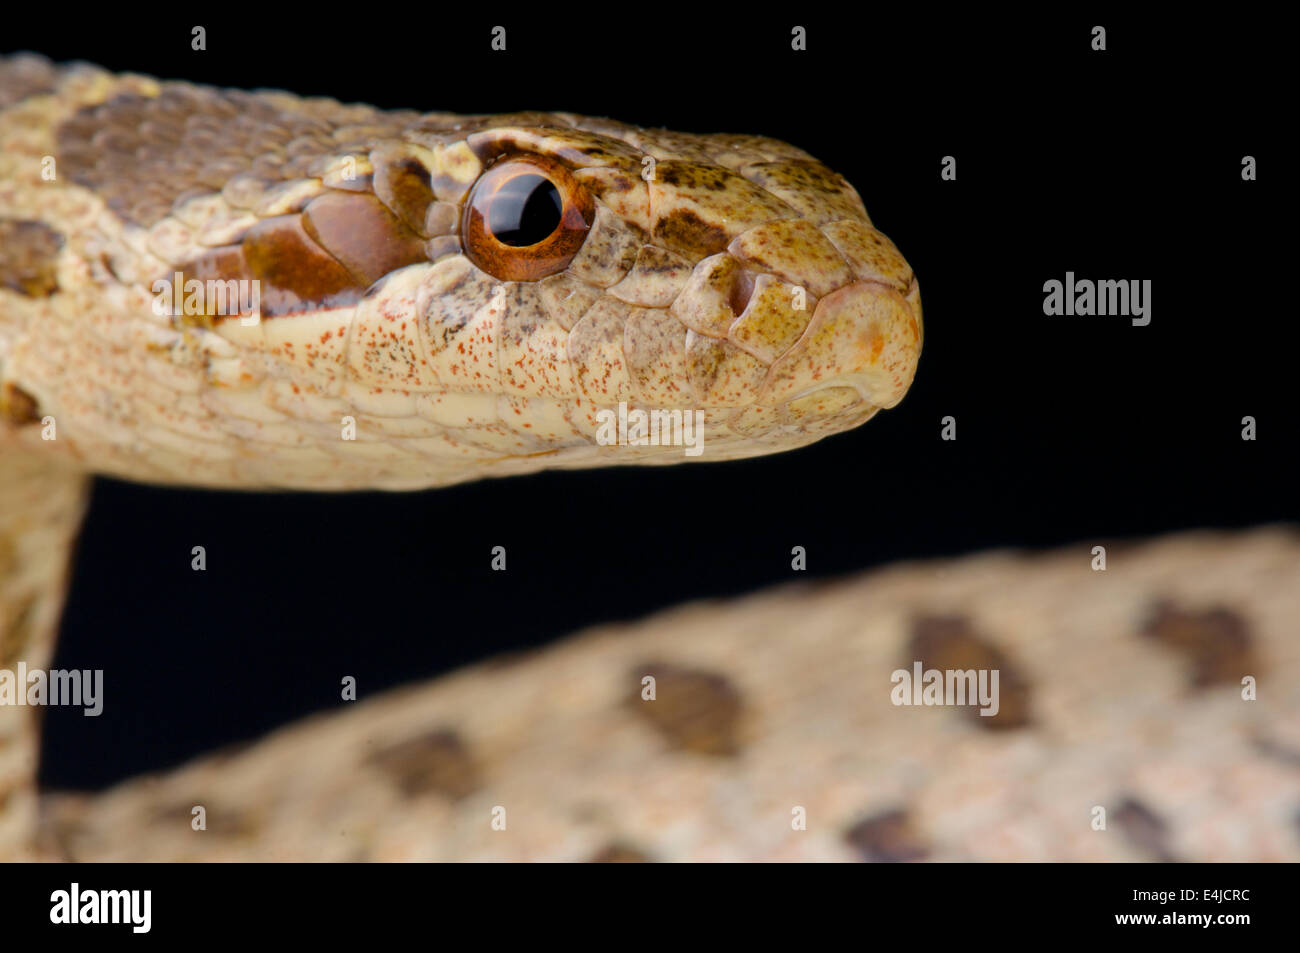 David's rat snake / Elaphe davidi Stock Photo